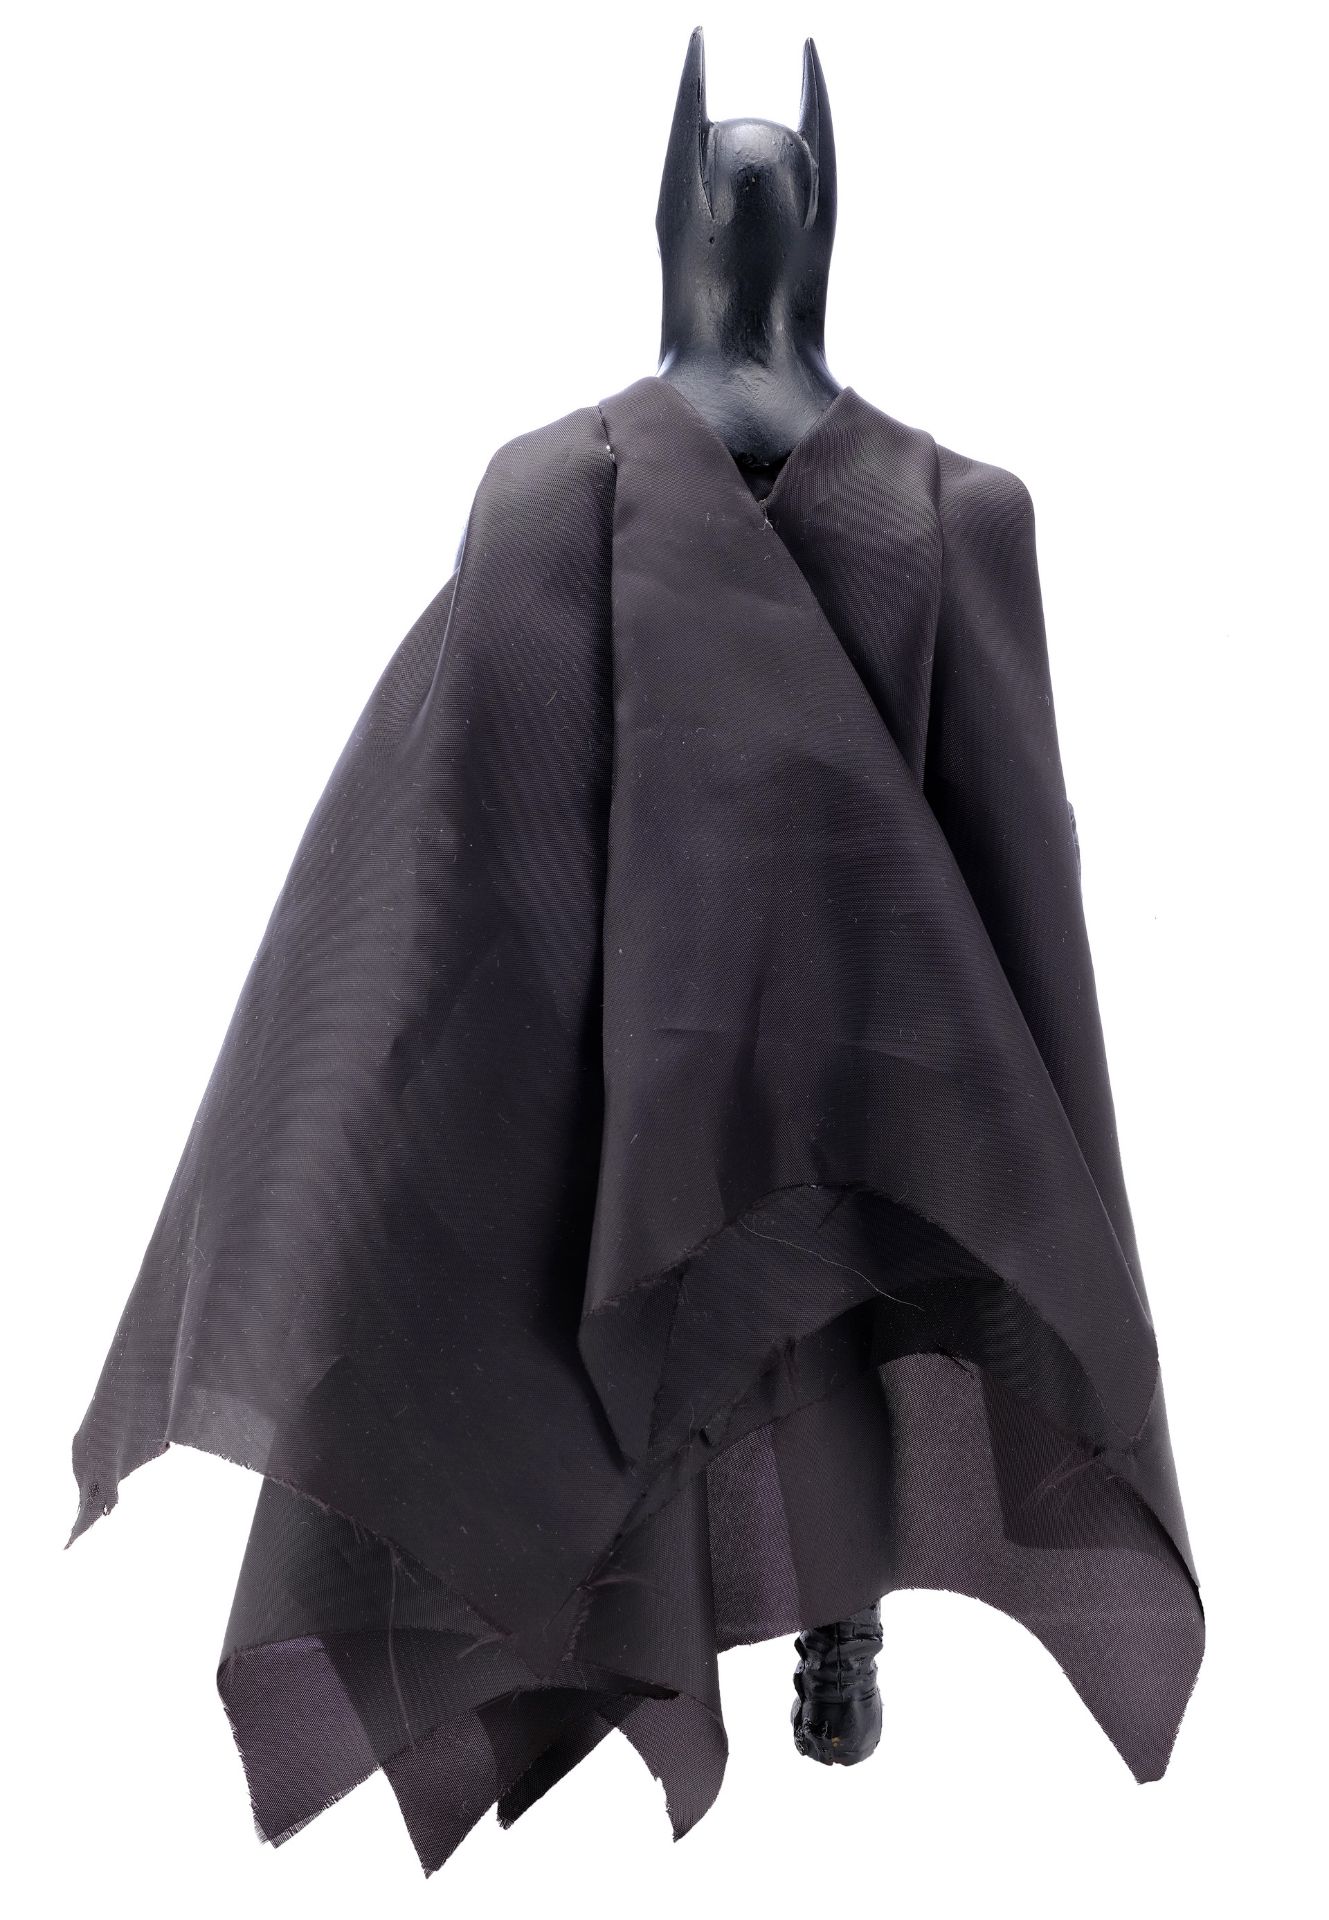 BATMAN FOREVER (1995) - Batman (Val Kilmer) Model Miniature - Image 4 of 5